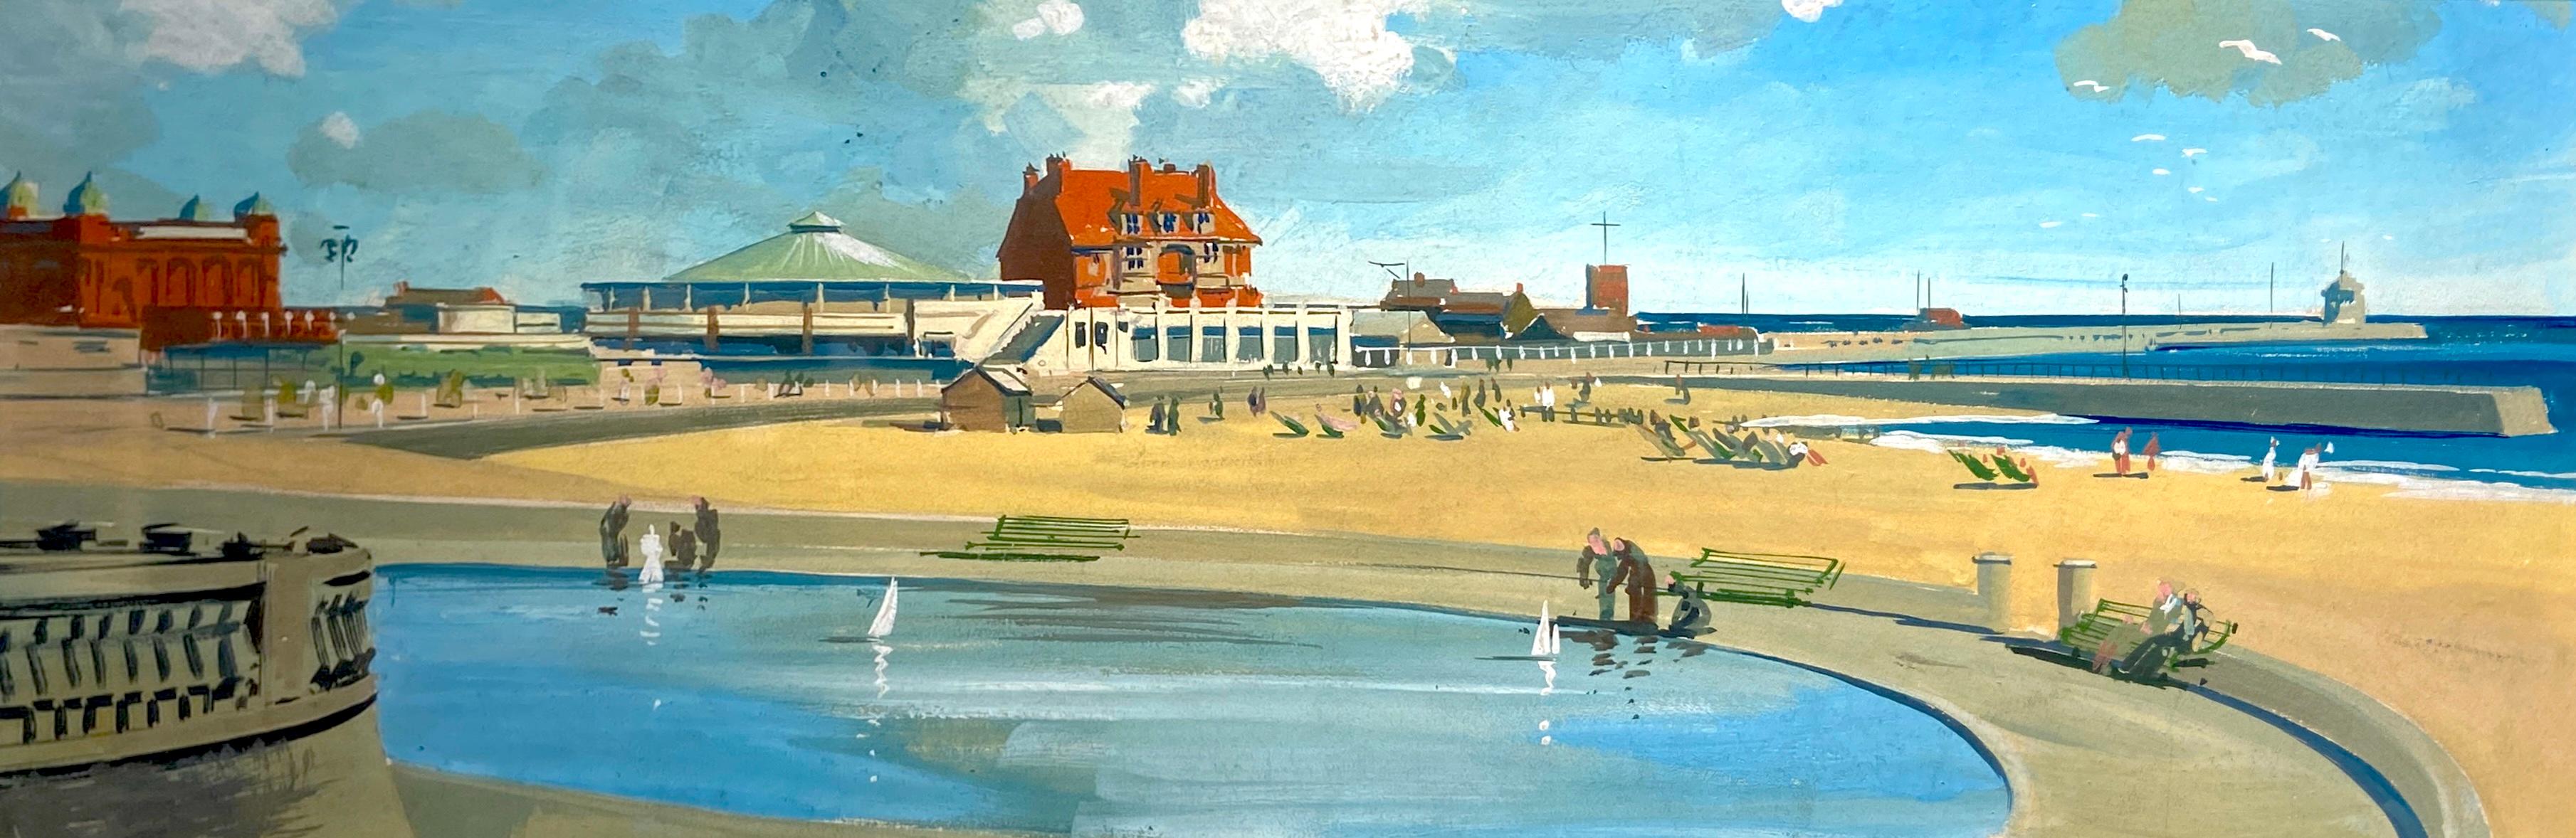 Frederick Donald Blake Landscape Art - Gorleston on Sea, Norfolk, 20th Century British Artist, Seascape